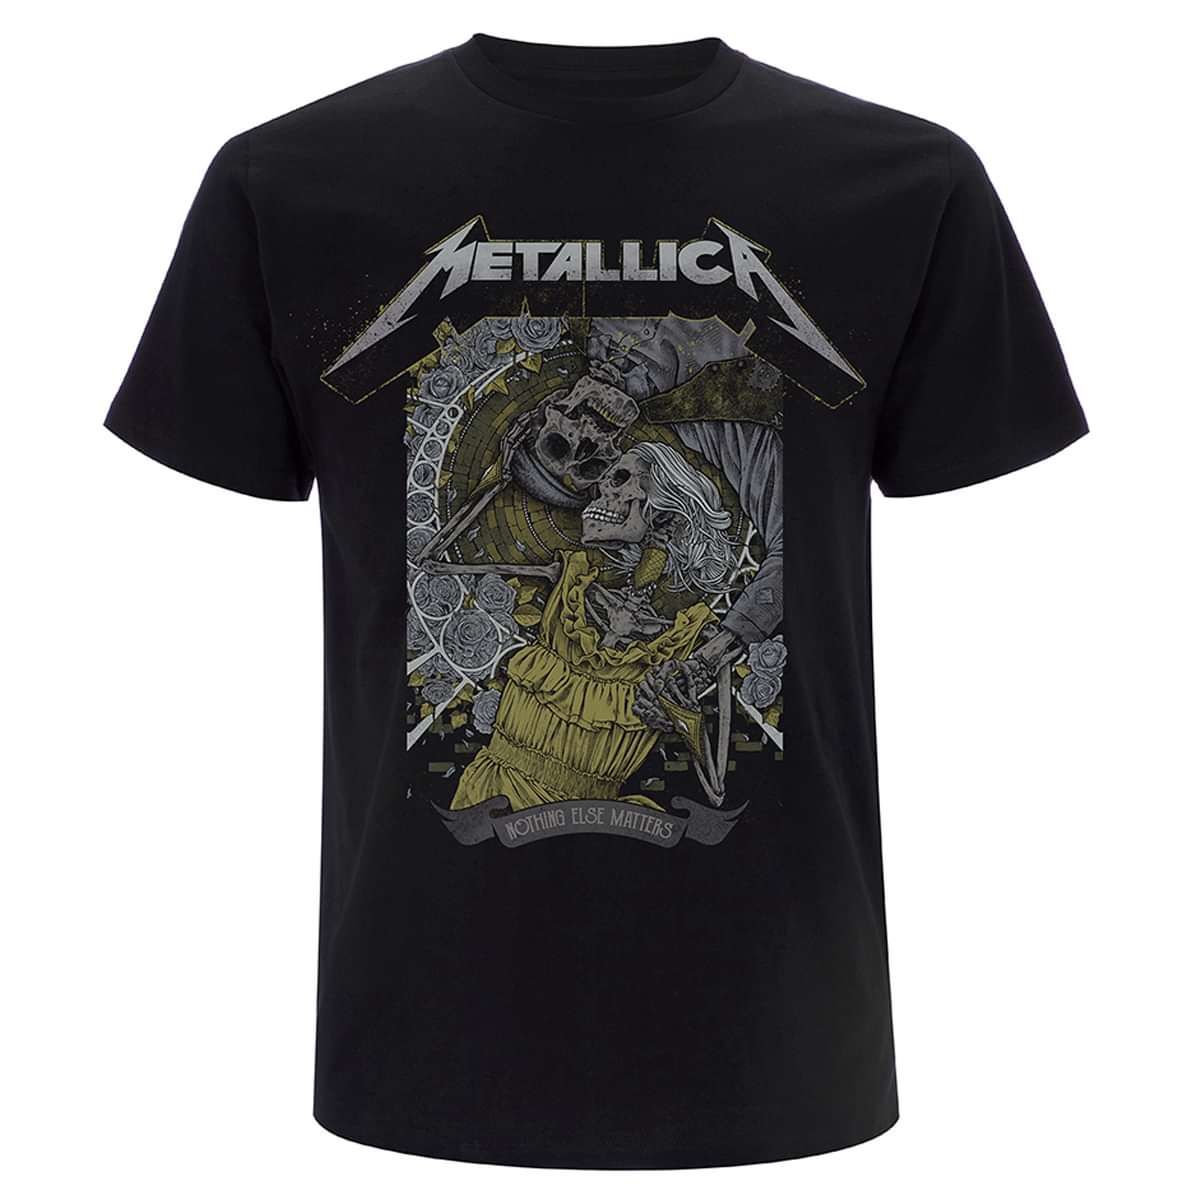 Nothing Else Matters Poster - Black T-Shirt - Metallica